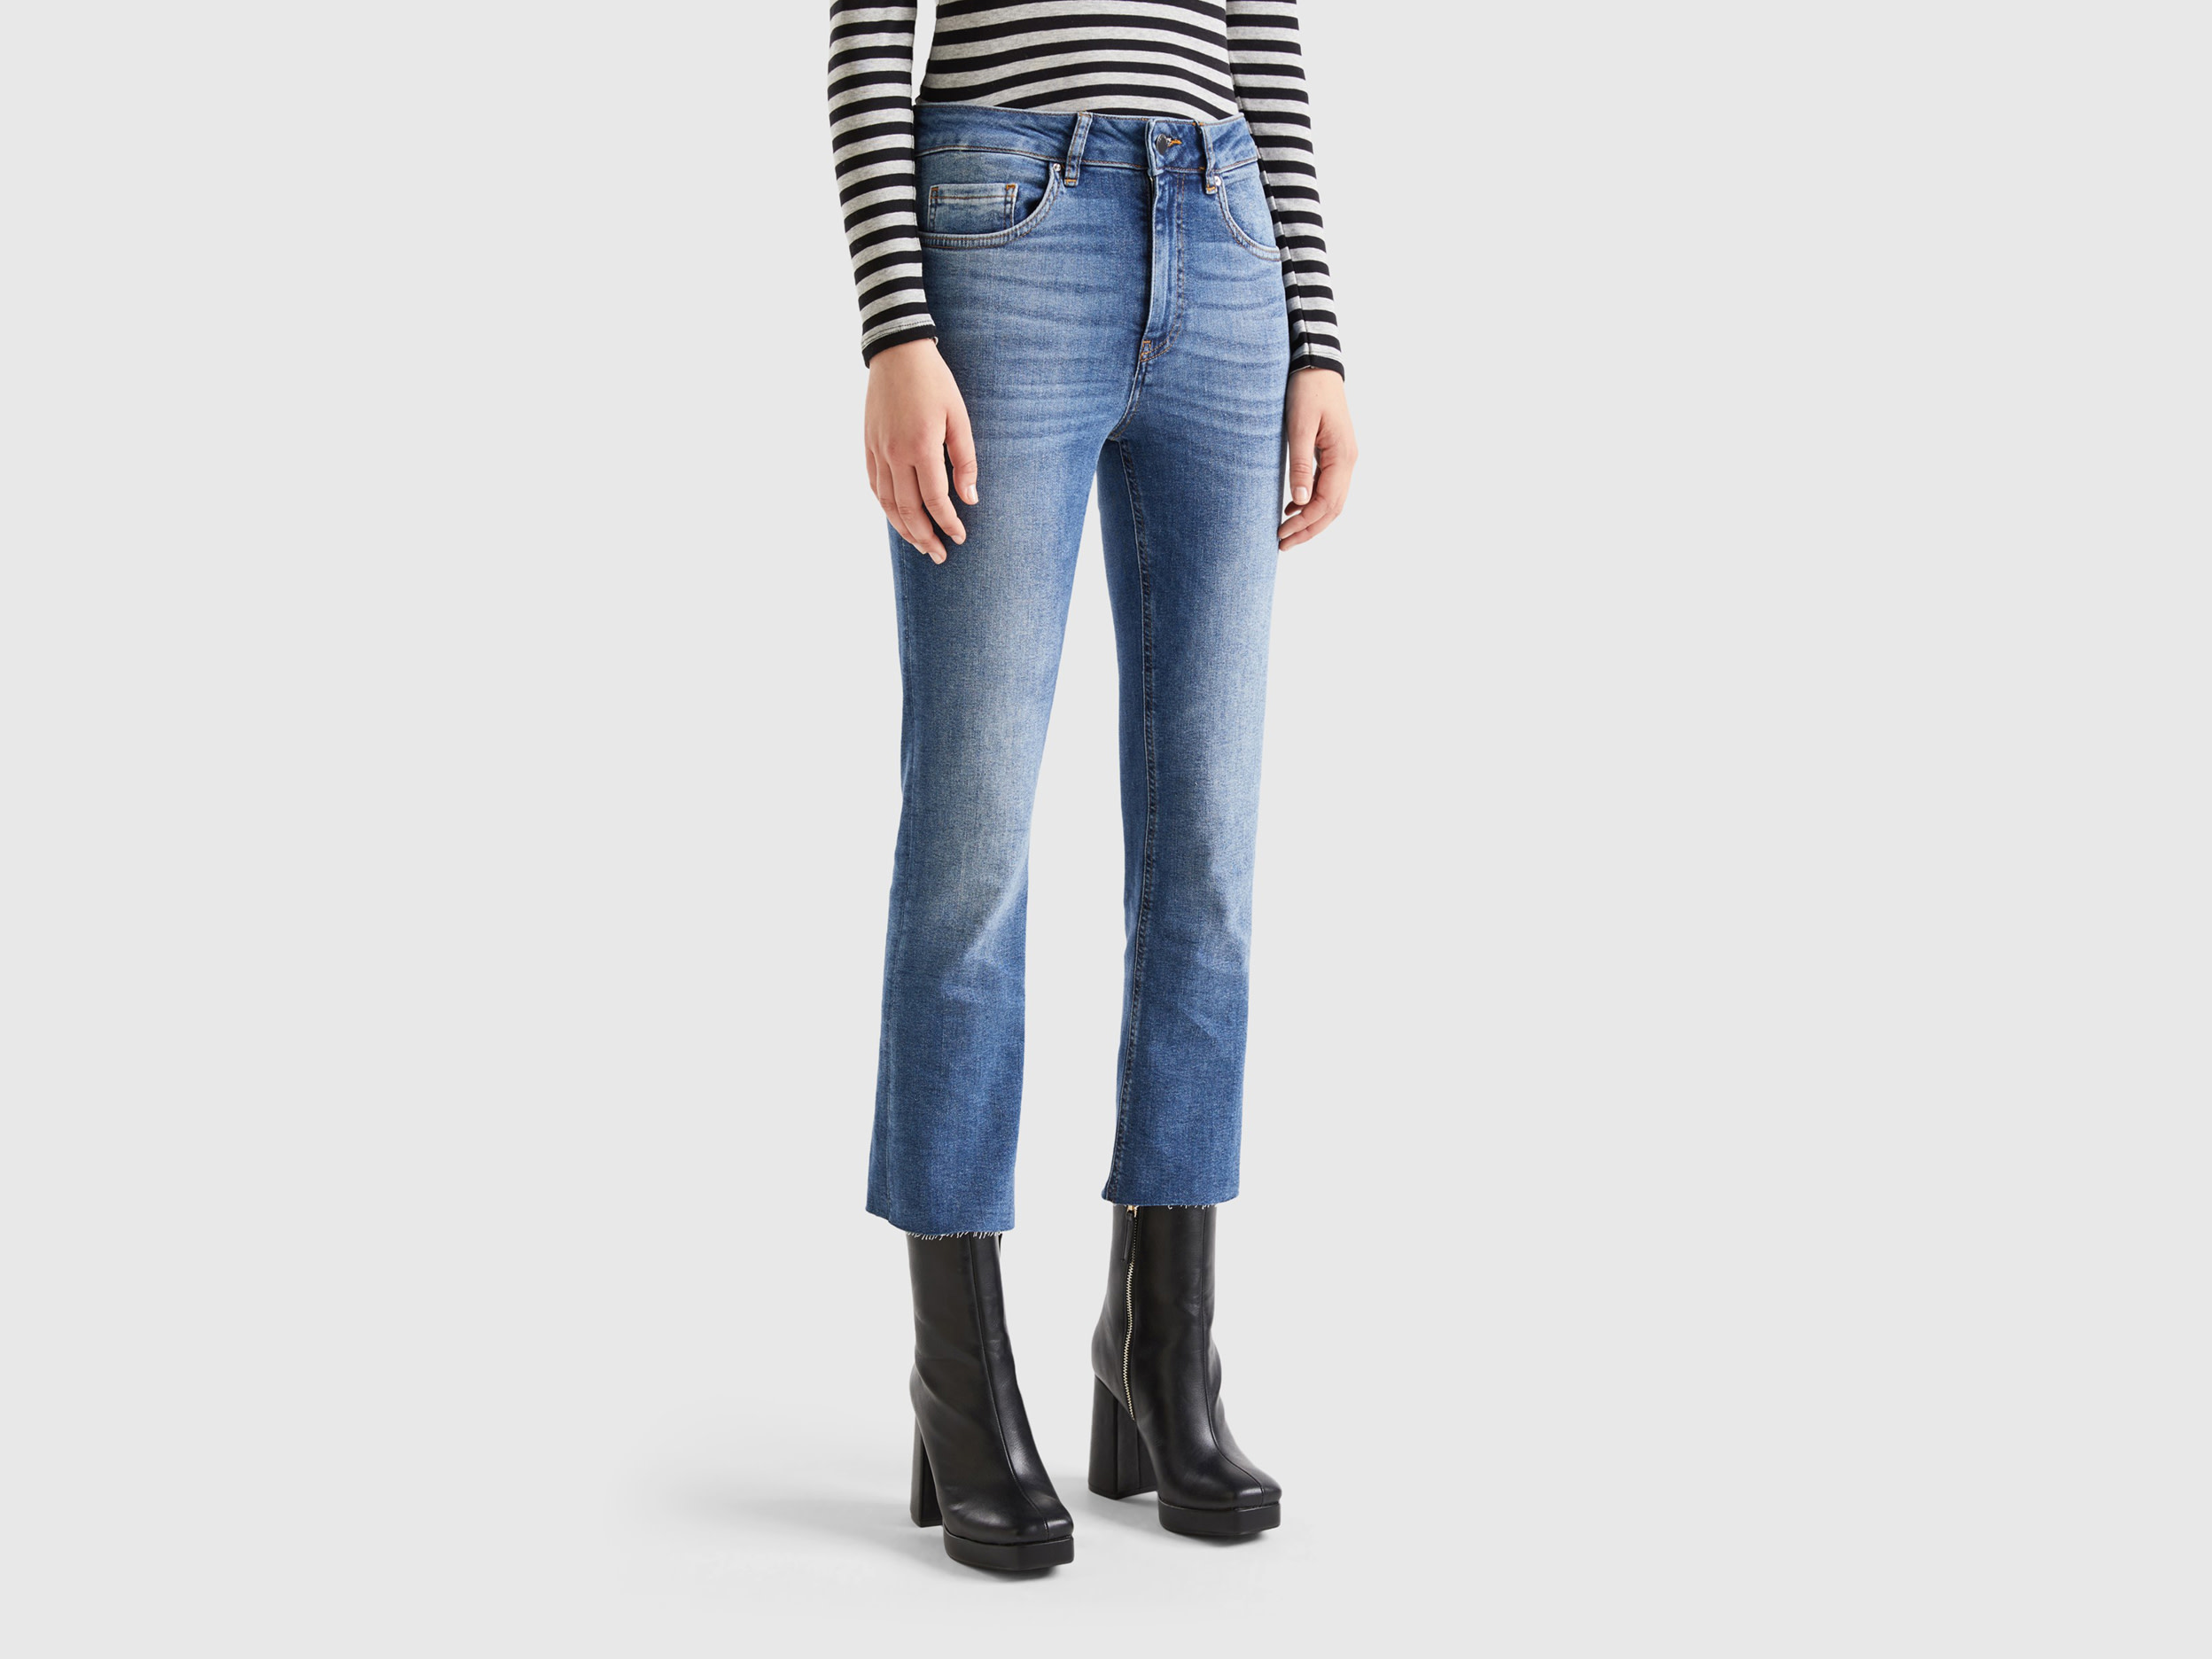 Benetton, Cropped Five-pocket Jeans, size 31, Blue, Women